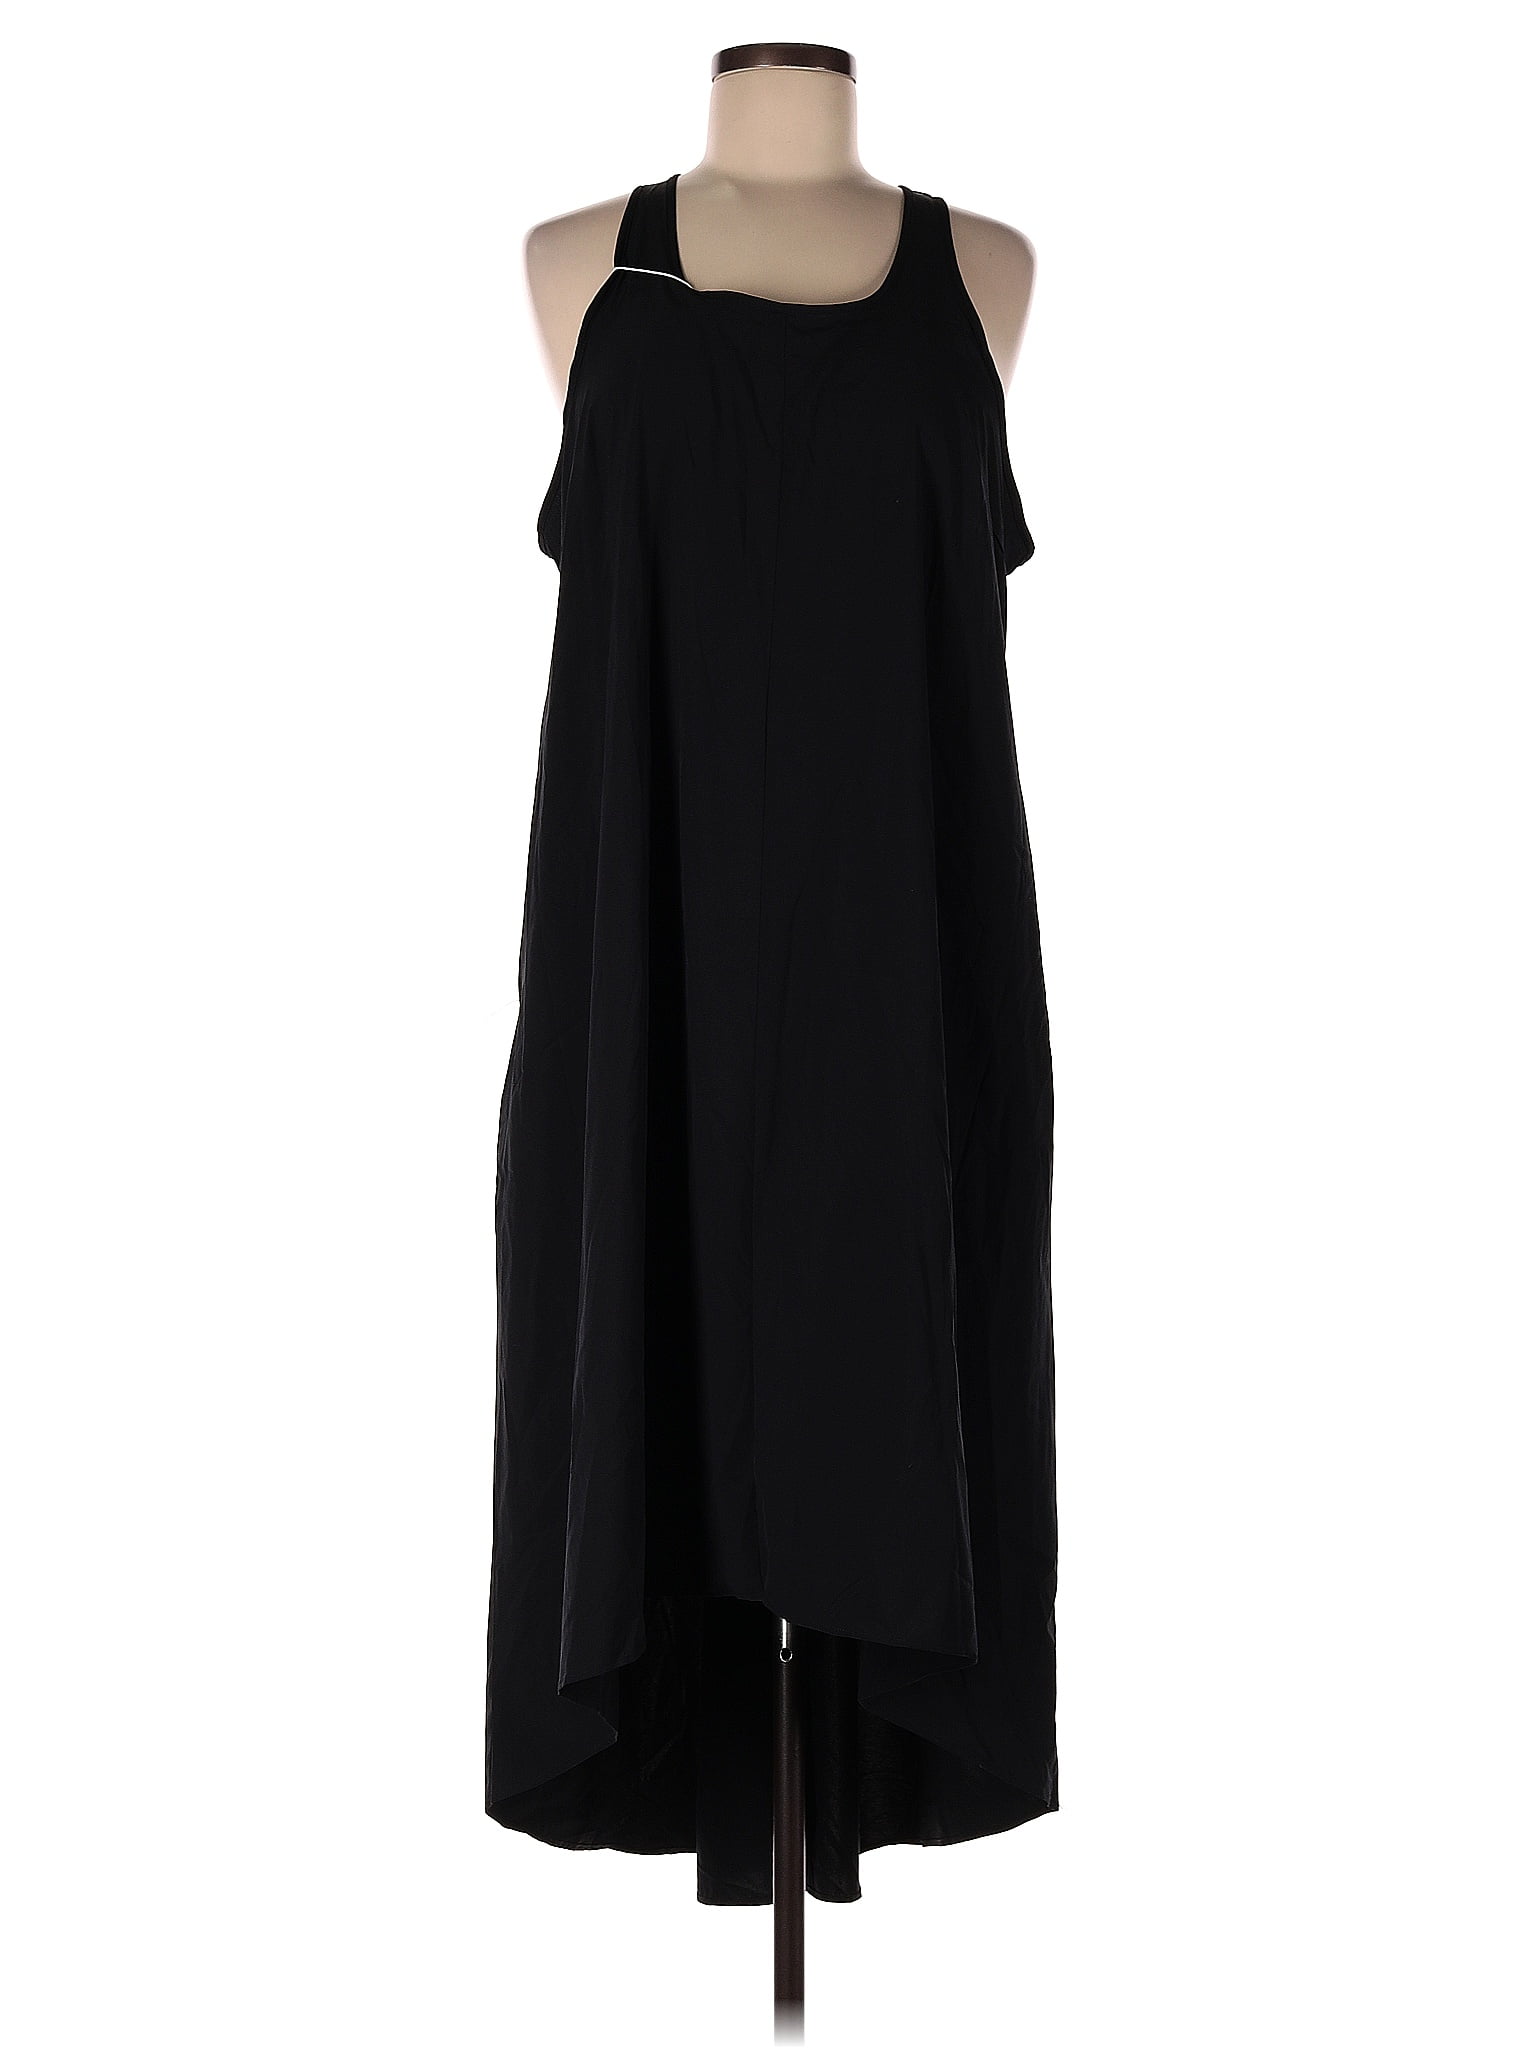 Halara Solid Black Casual Dress Size L - 65% off